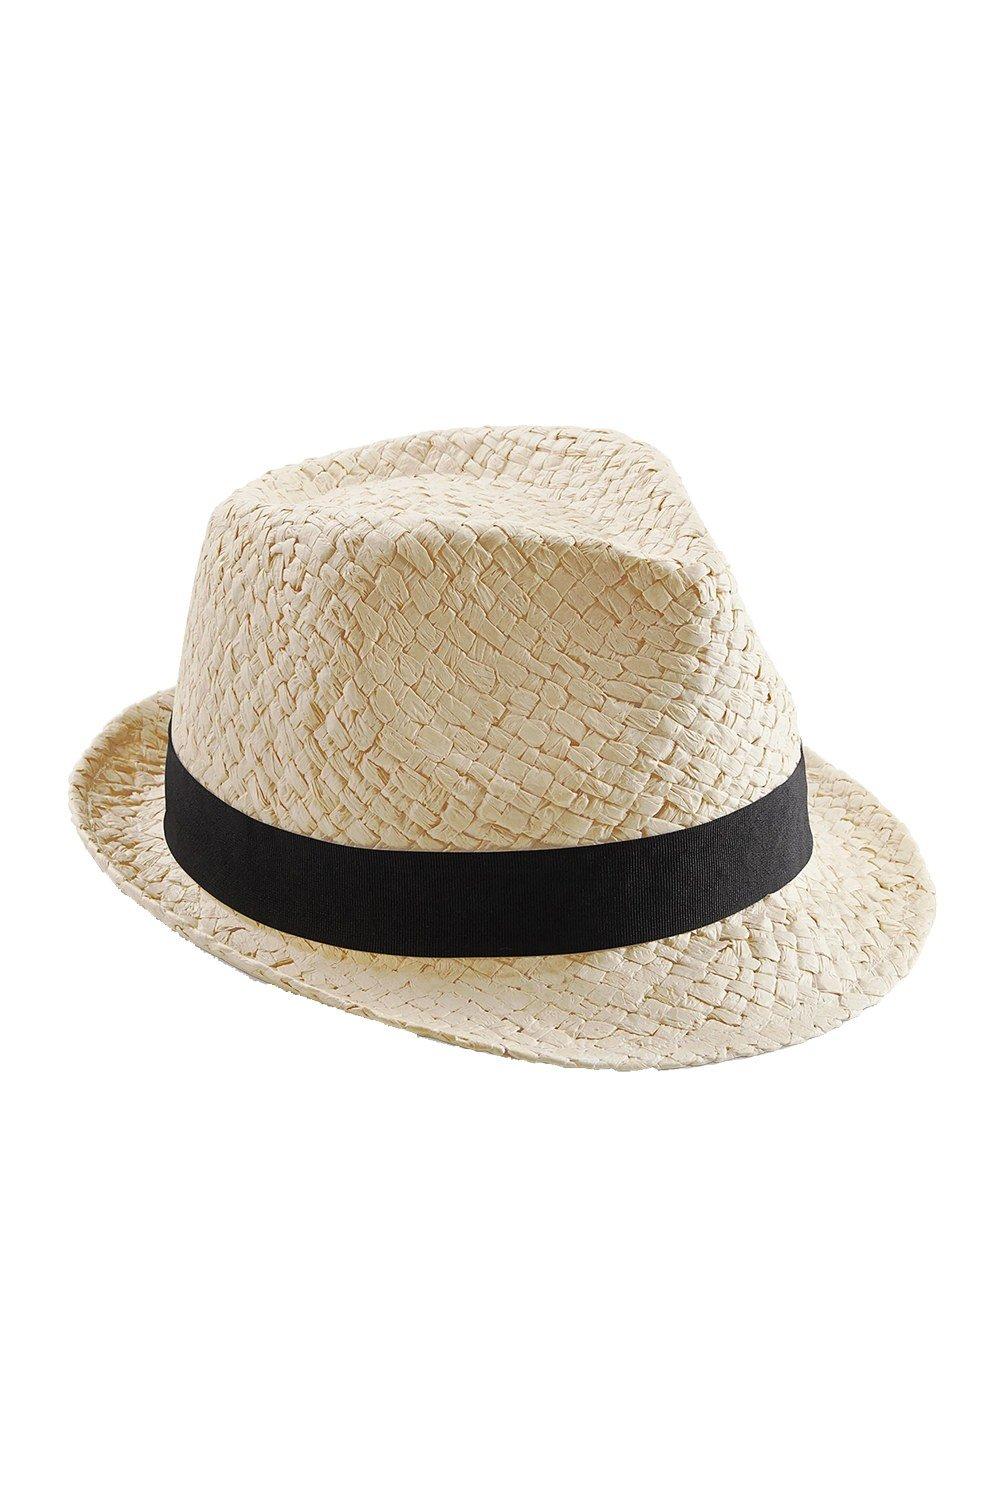 Соломенная шляпа-трилби для фестиваля Beechfield, обнаженная l 49 воробьи